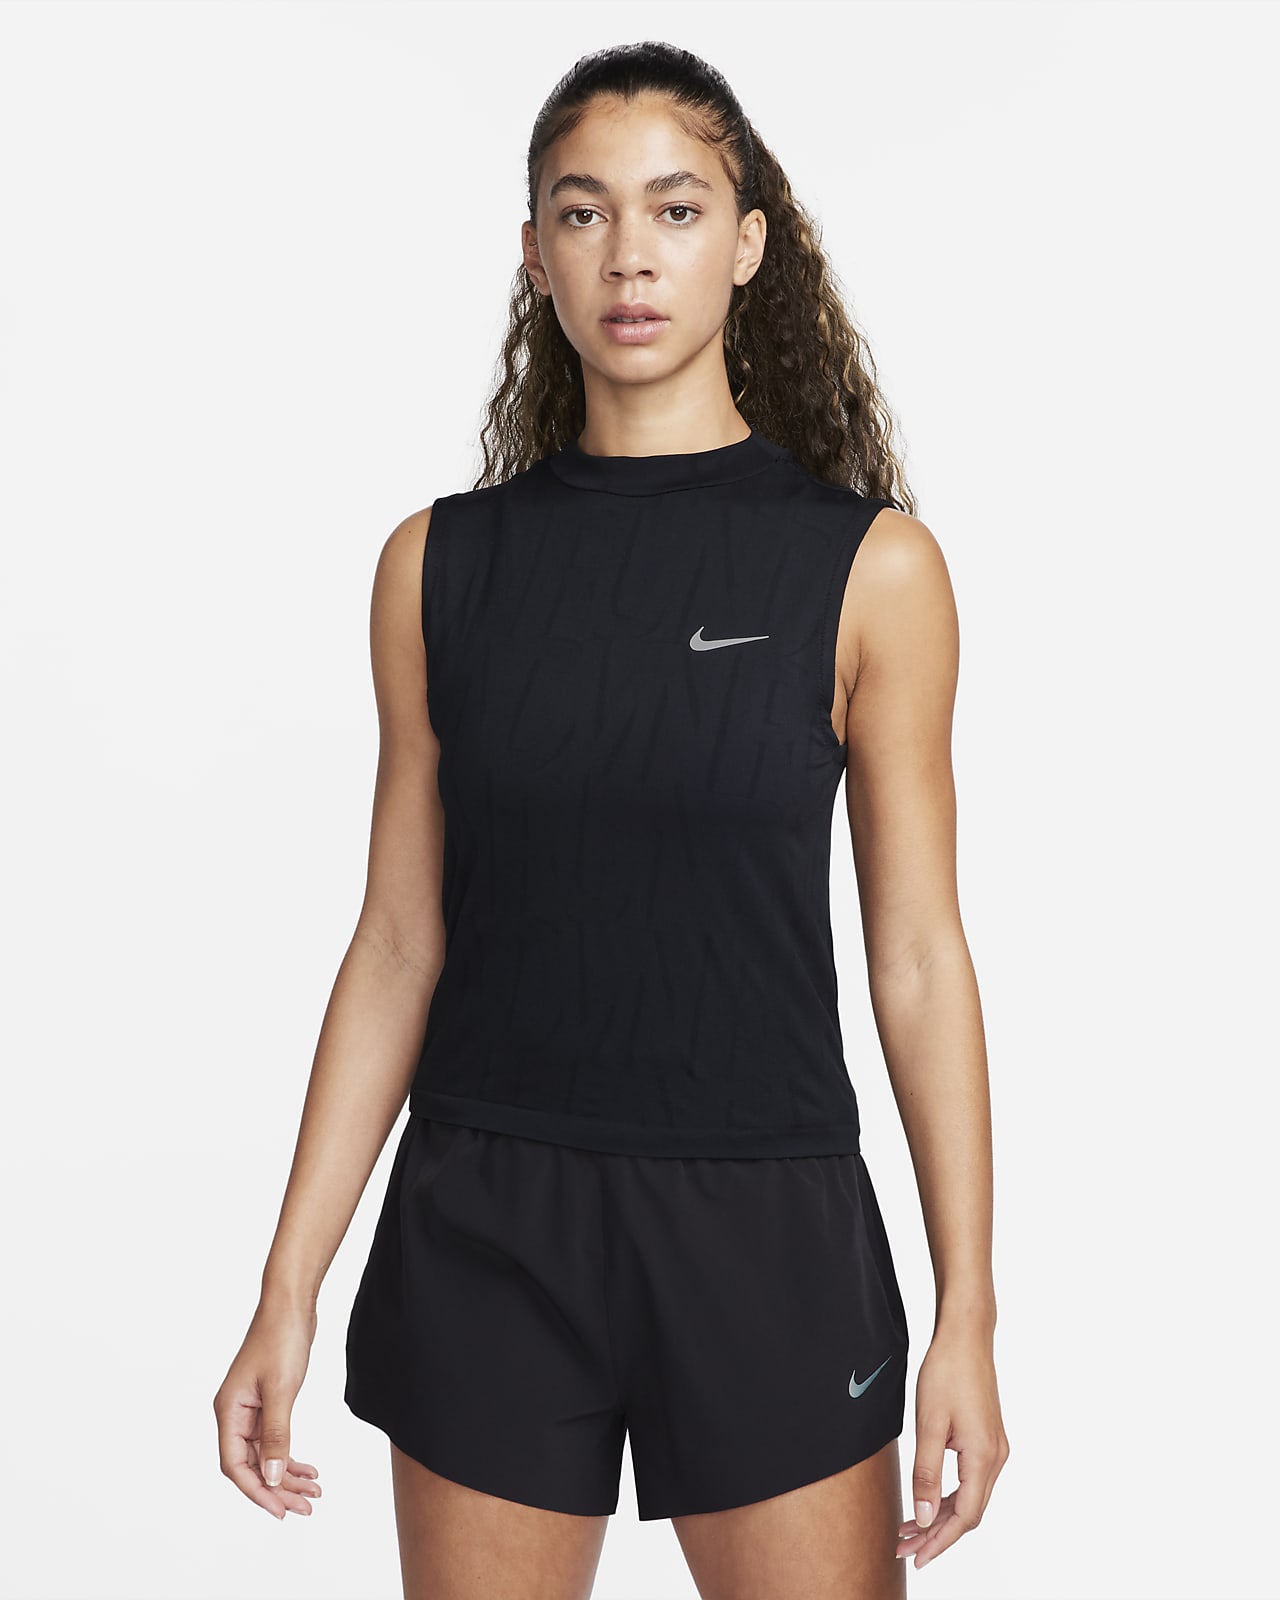 Nike Womens Stretch Activewear Tank Top Black XS 